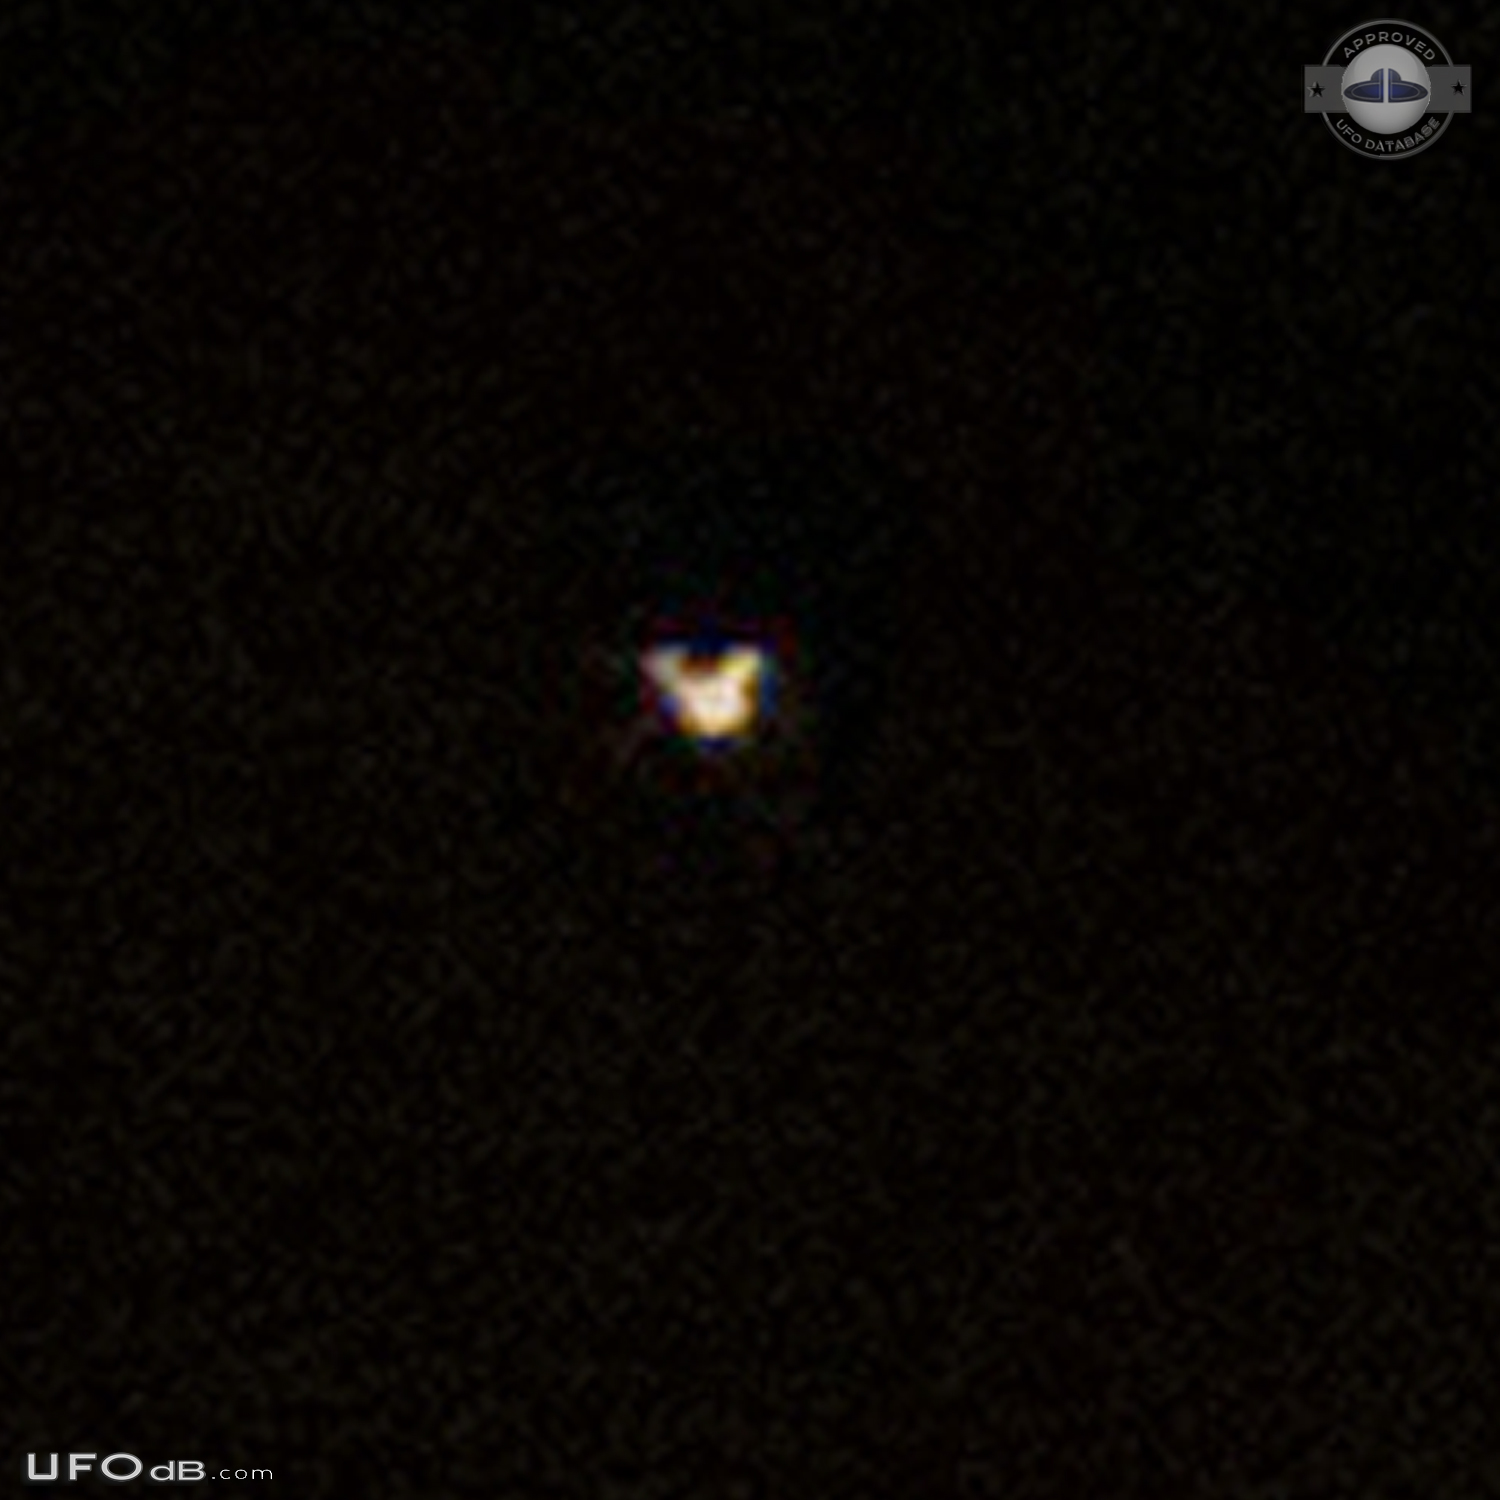 Observed 20+ white/reddish orange orbs UFOs - Louisiana USA 2015 UFO Picture #683-4